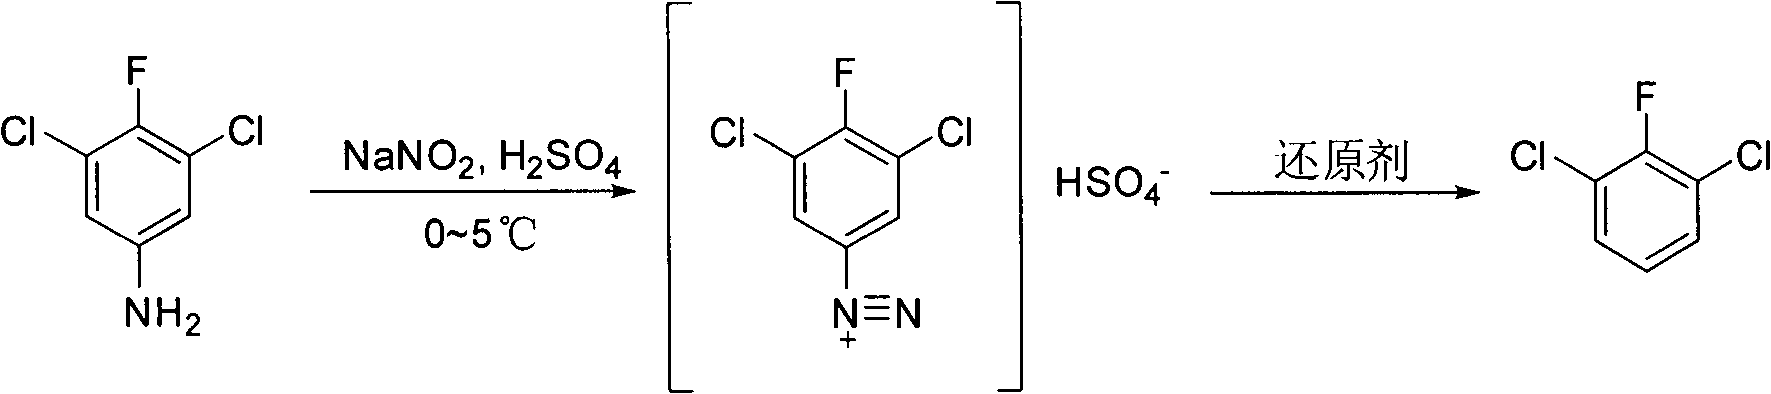 Preparation method of 2, 6-dichlor fluorbenzene